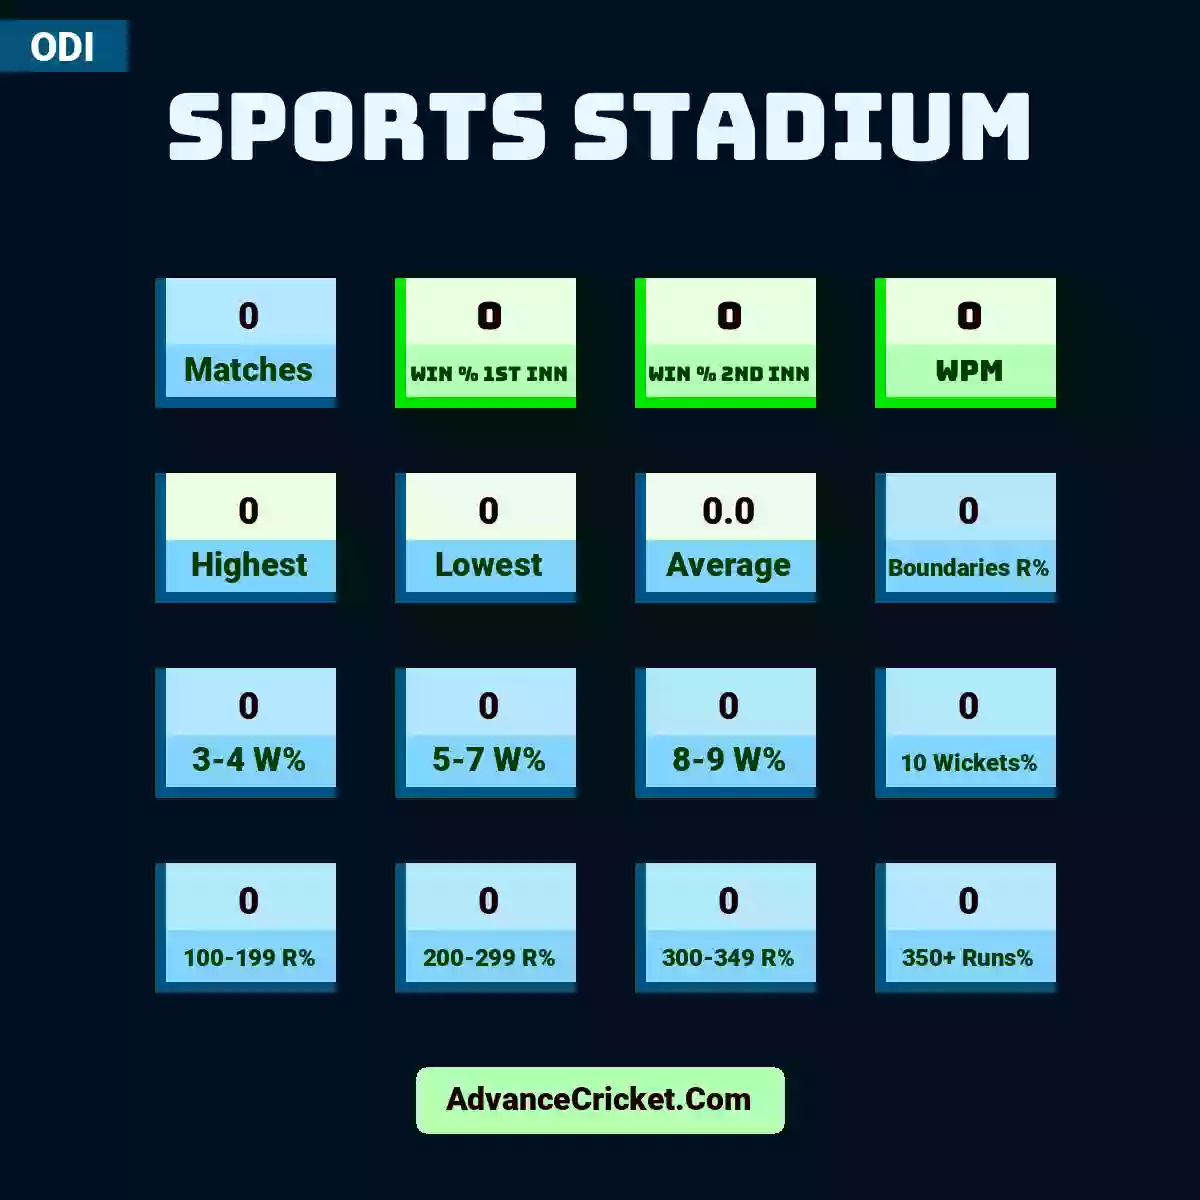 Image showing Sports Stadium with Matches: 0, Win % 1st Inn: 0, Win % 2nd Inn: 0, WPM: 0, Highest: 0, Lowest: 0, Average: 0.0, Boundaries R%: 0, 3-4 W%: 0, 5-7 W%: 0, 8-9 W%: 0, 10 Wickets%: 0, 100-199 R%: 0, 200-299 R%: 0, 300-349 R%: 0, 350+ Runs%: 0.